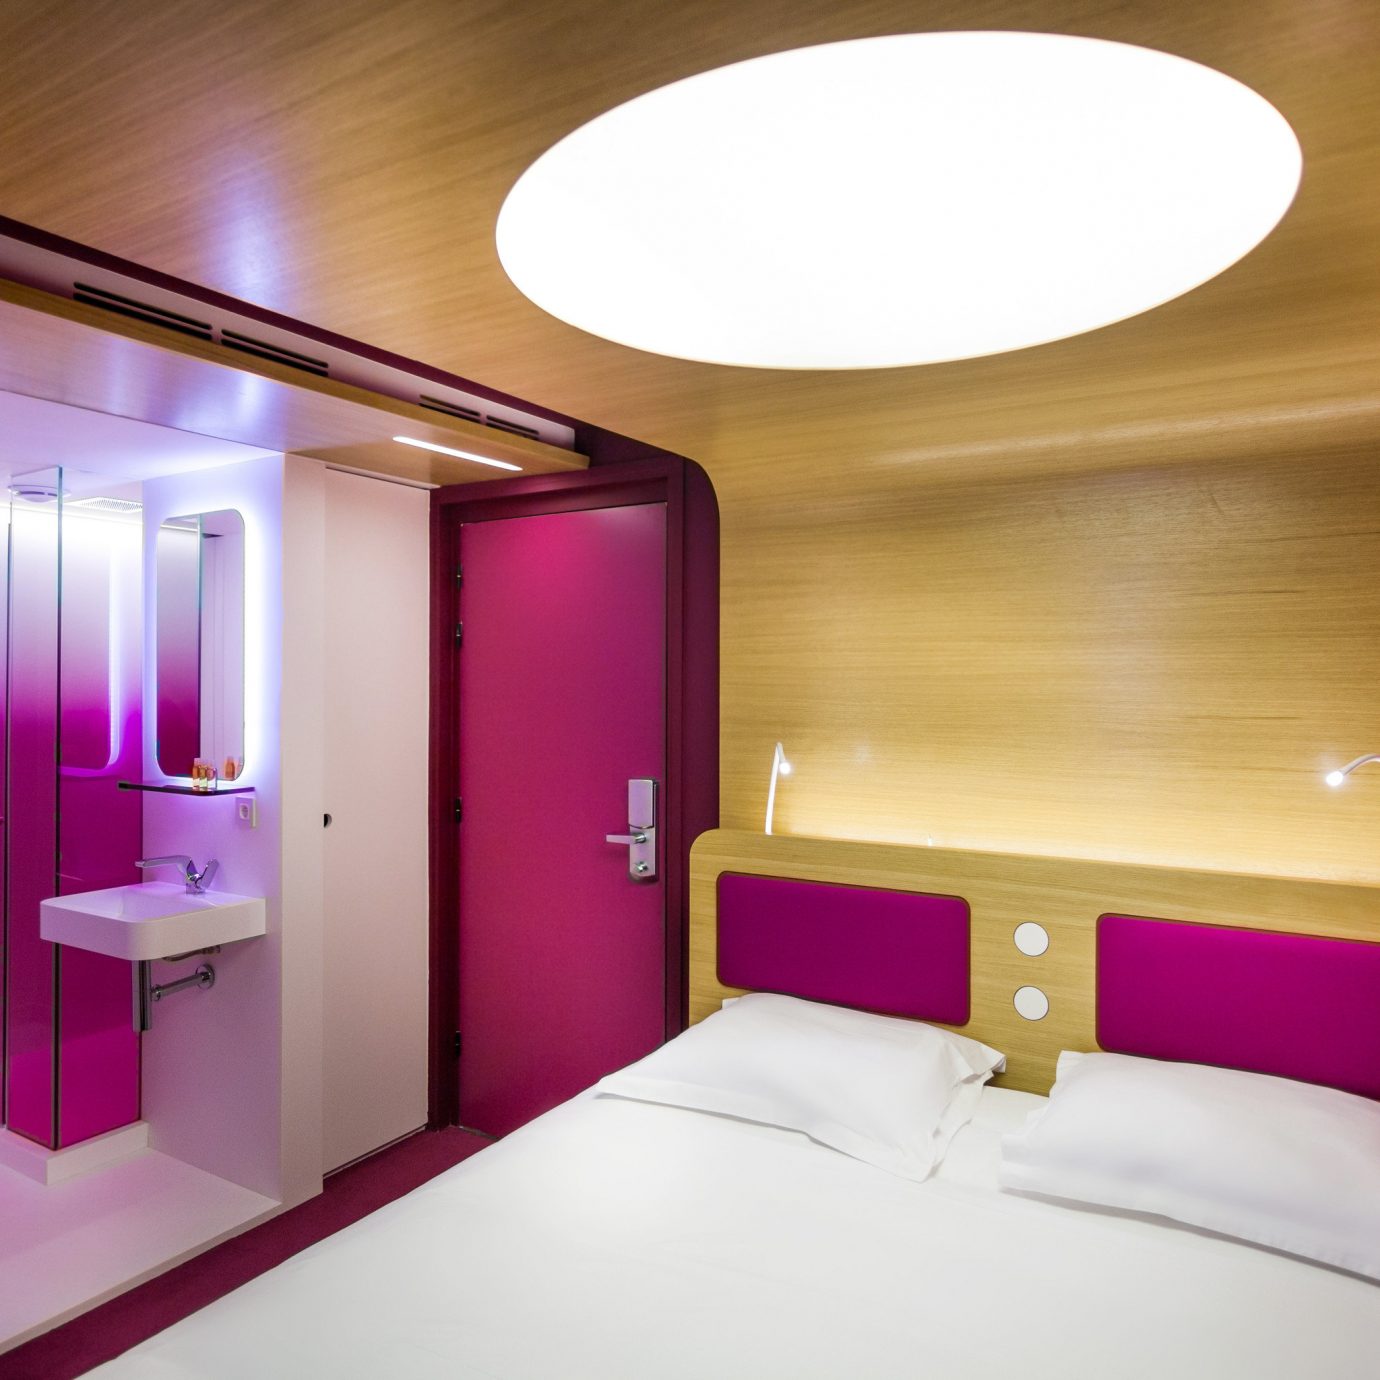 Bedroom Business City Hip Modern Resort Romance Romantic property Suite purple lamp